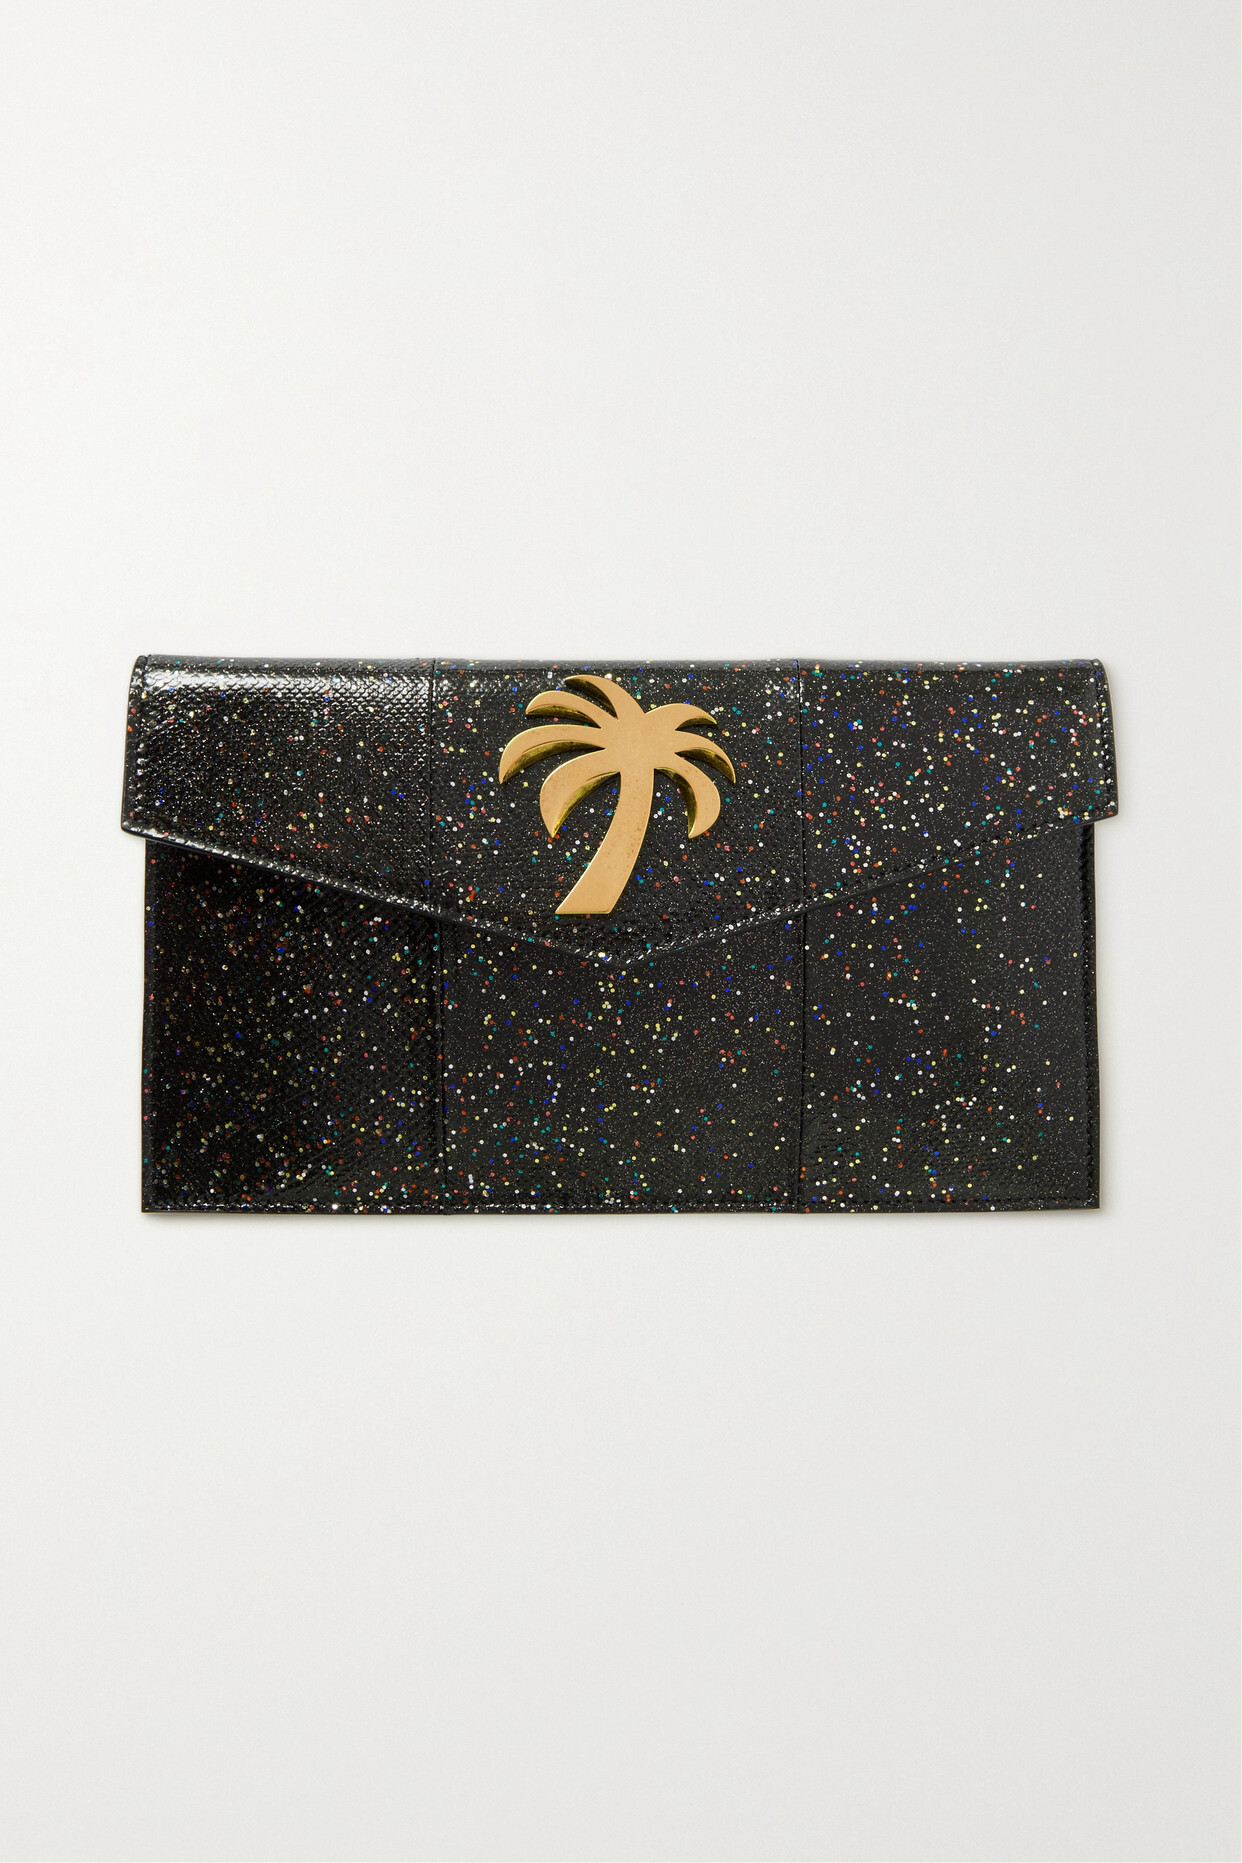 Palm Angels - Palm Beach Glittered Embellished Python Clutch - Black